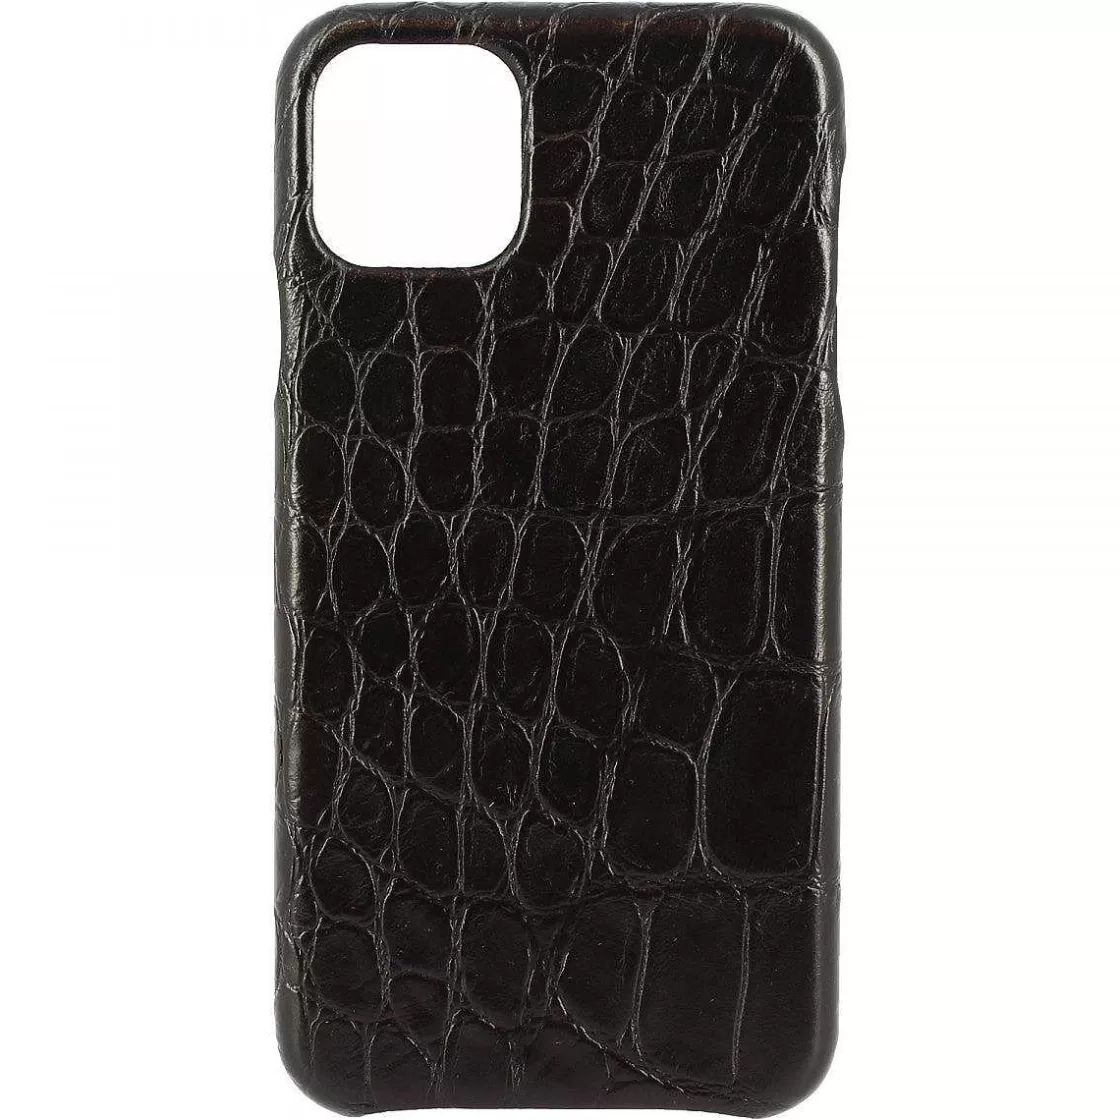 Leonardo Iphone Cover In Black Crocodile Embossed Leather Fashion